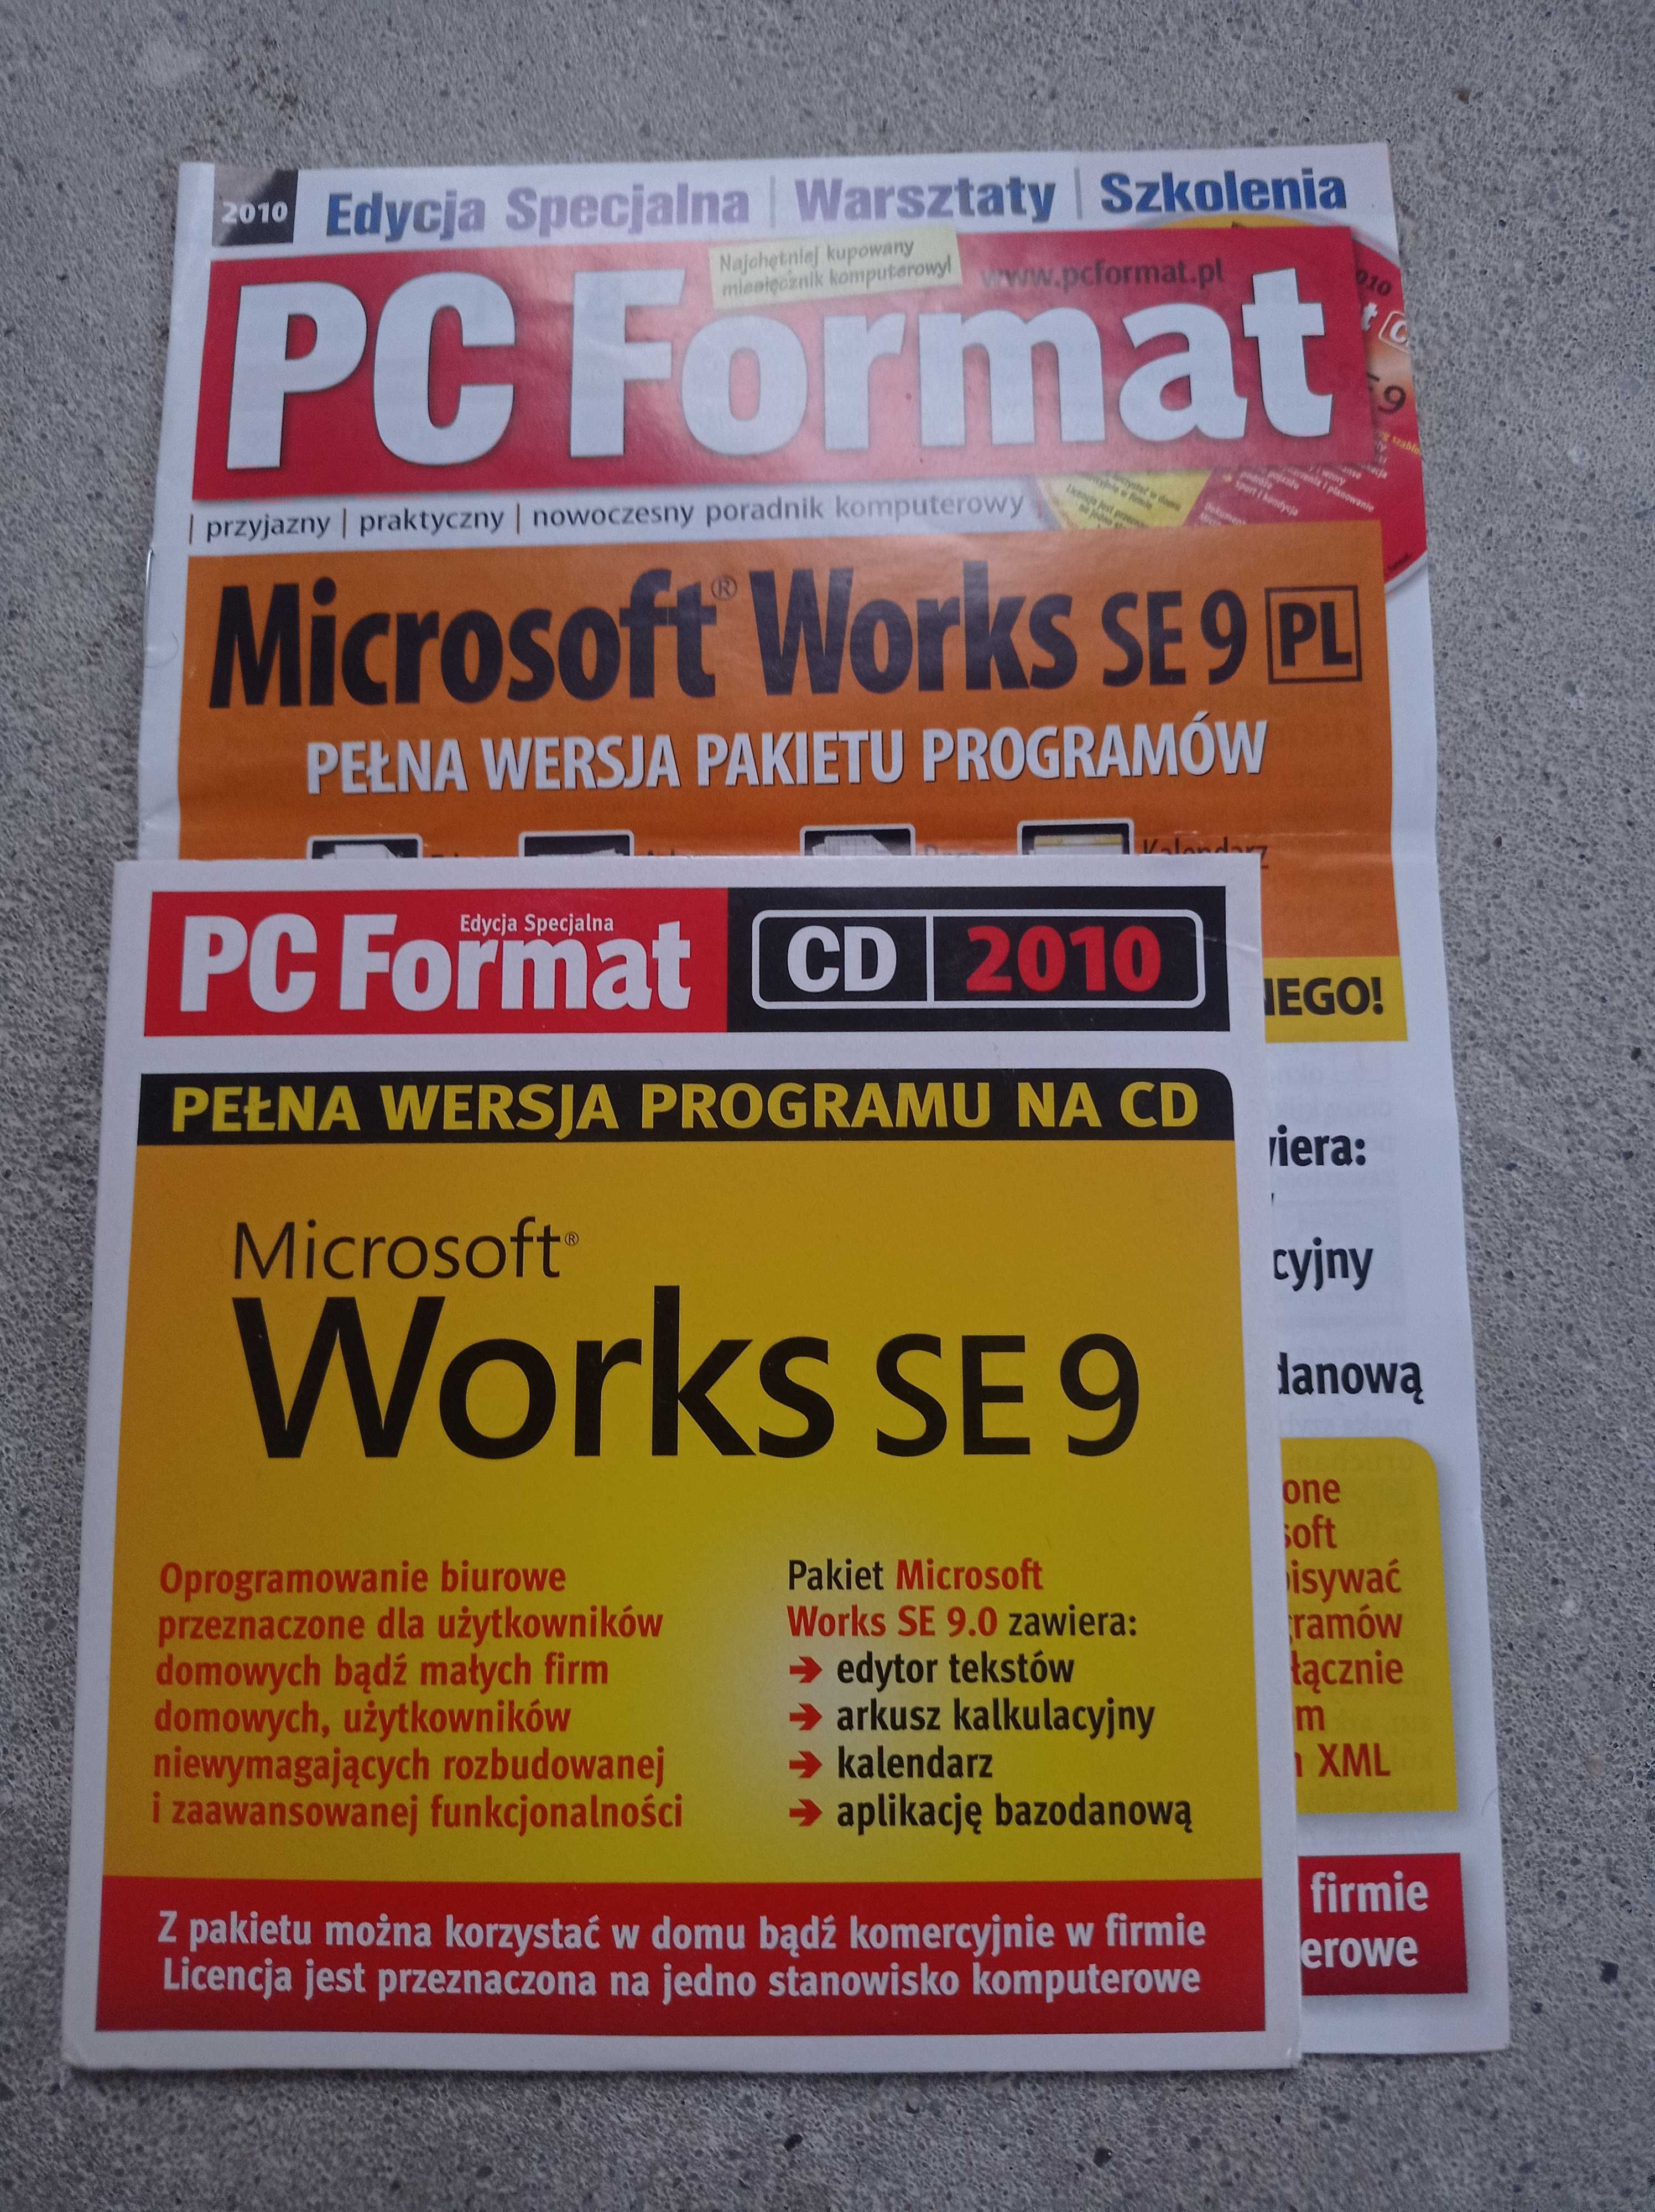 Microsoft Works SE 9 PL